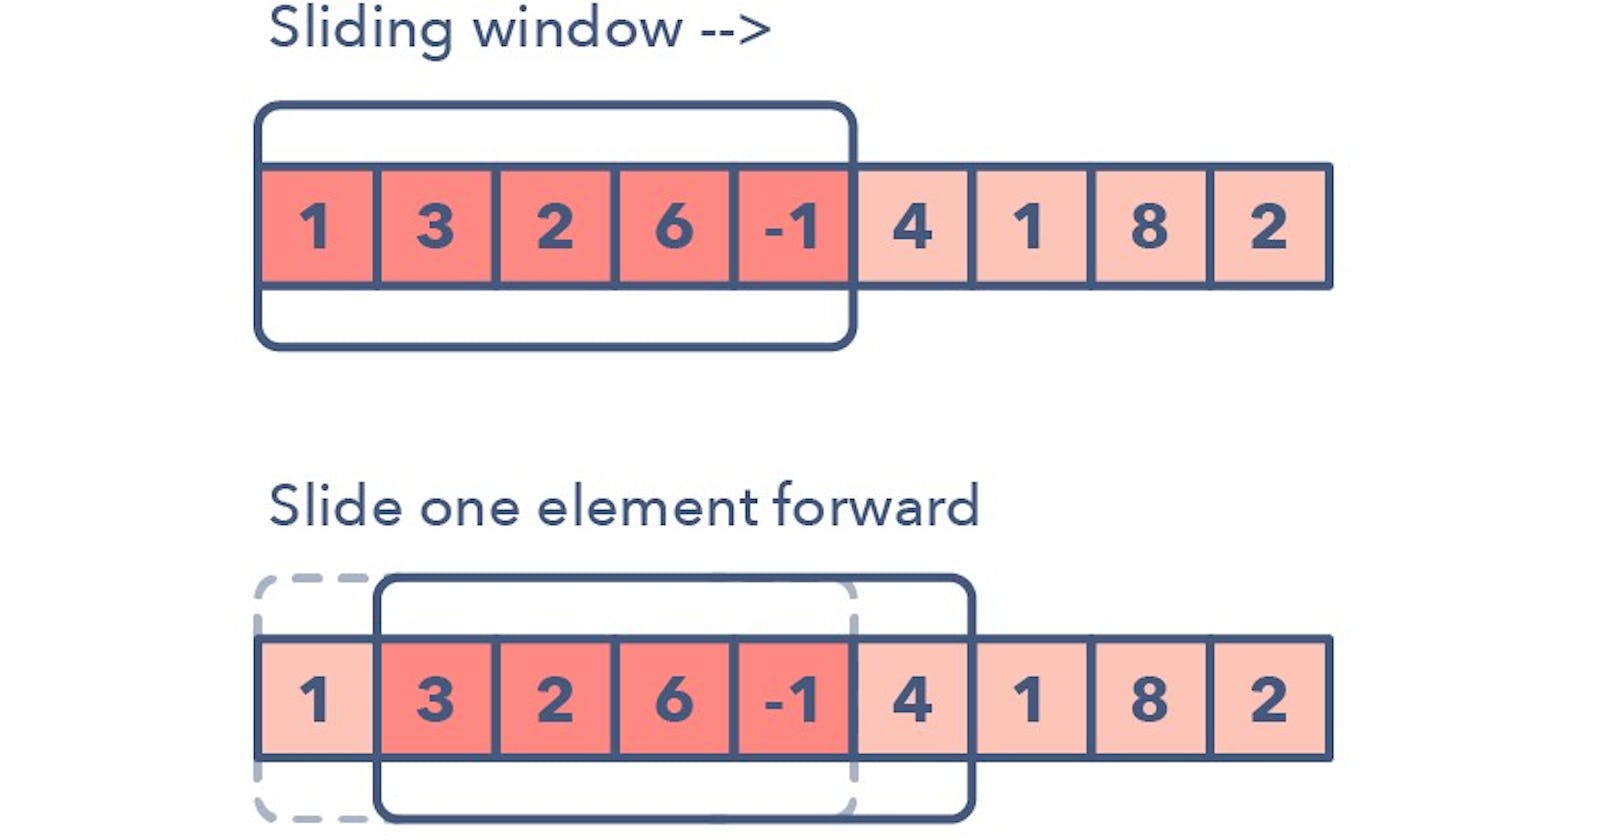 Understanding The Sliding Window Maximum Problem